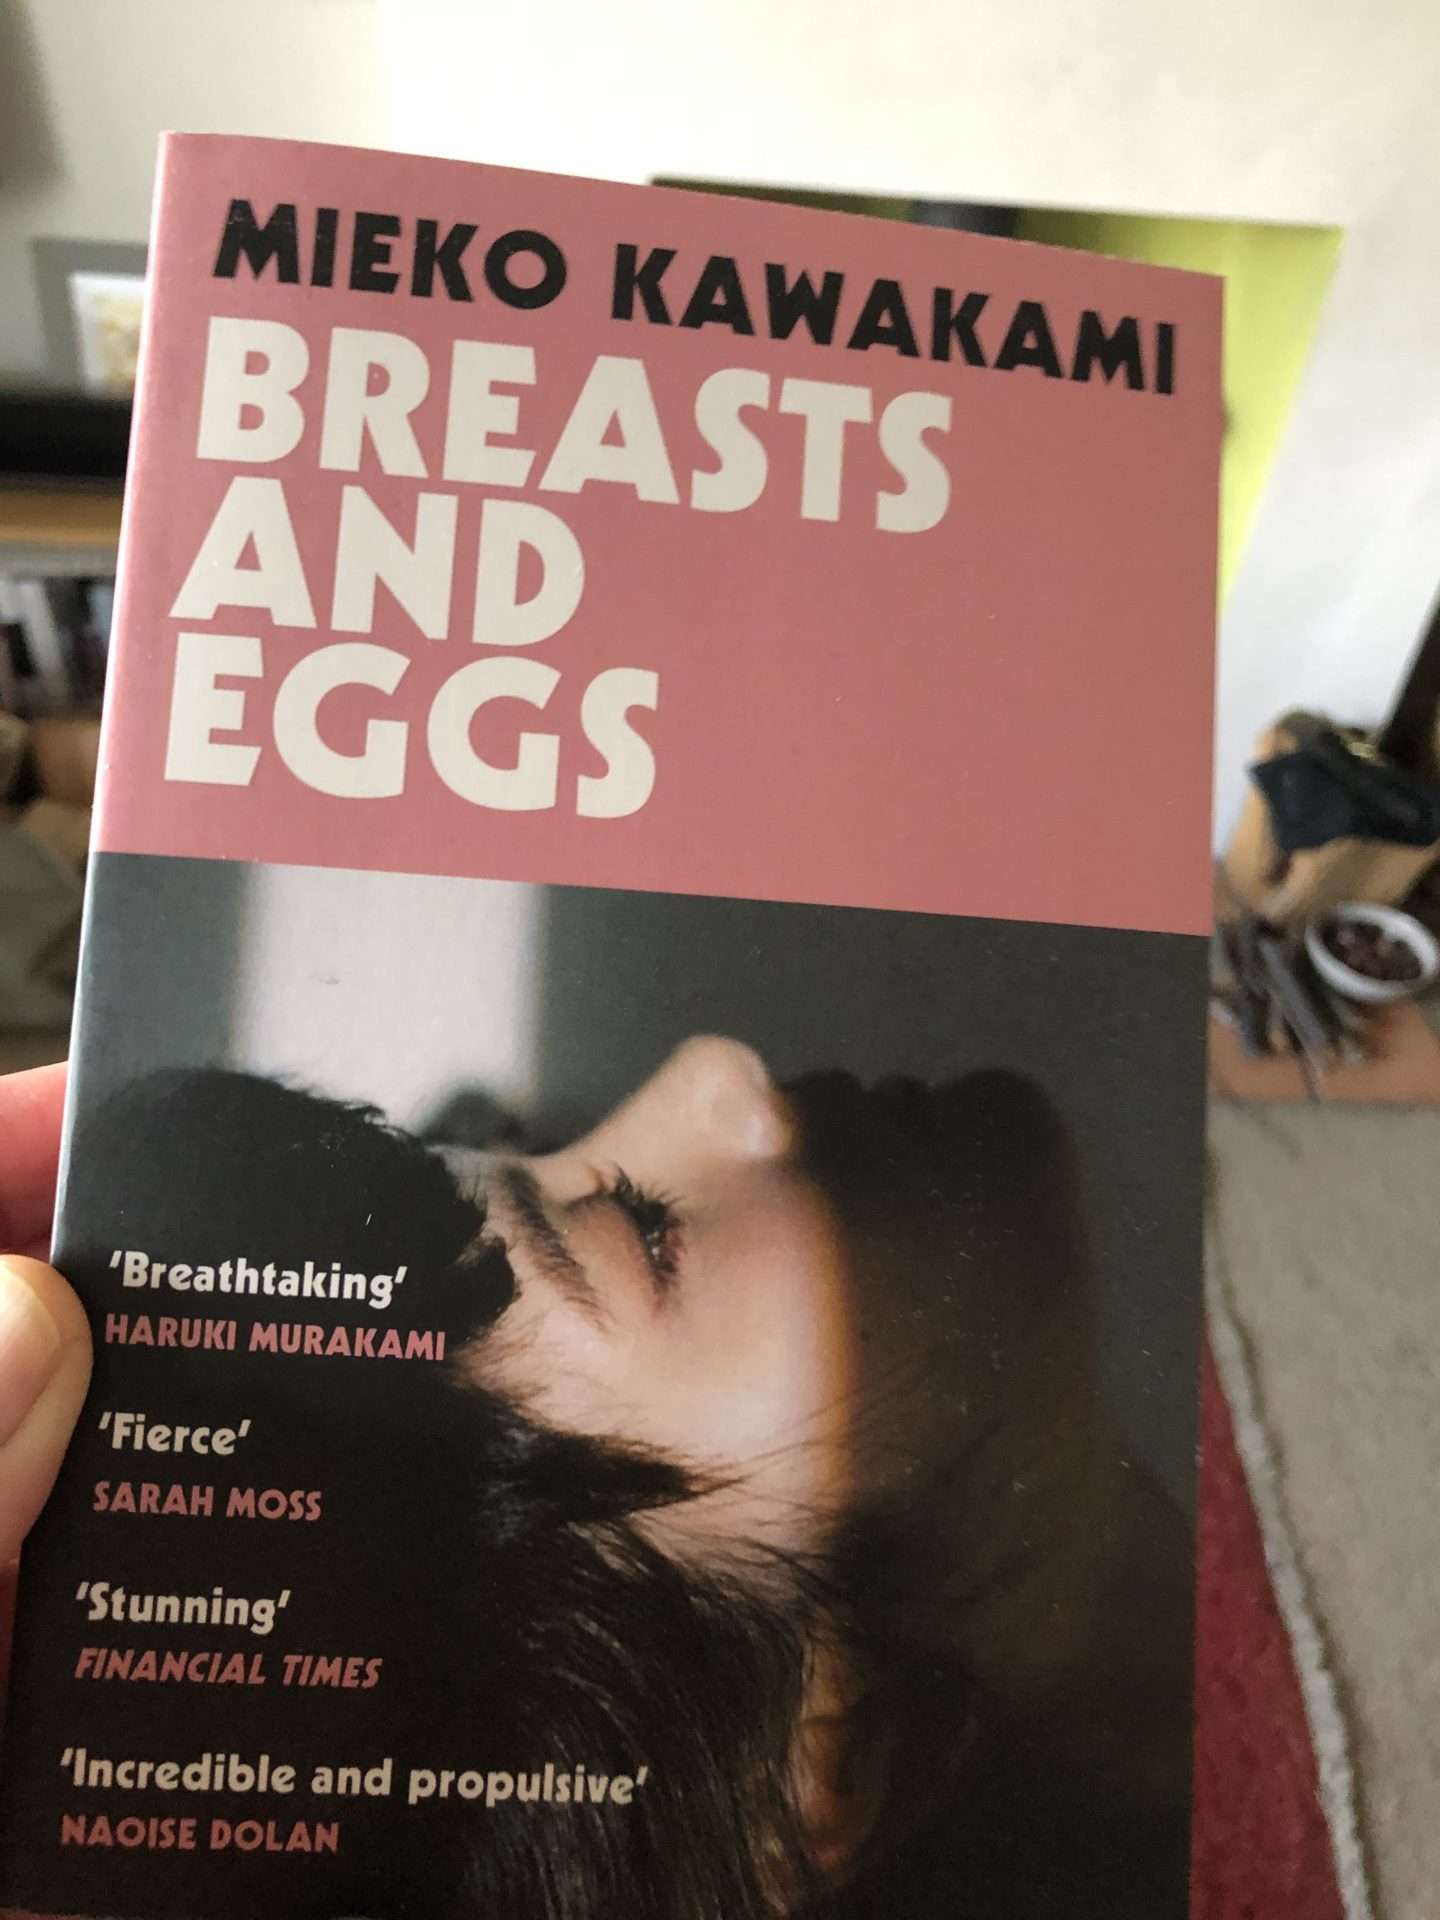 Breast & Eggs book by Mieko Kawakami